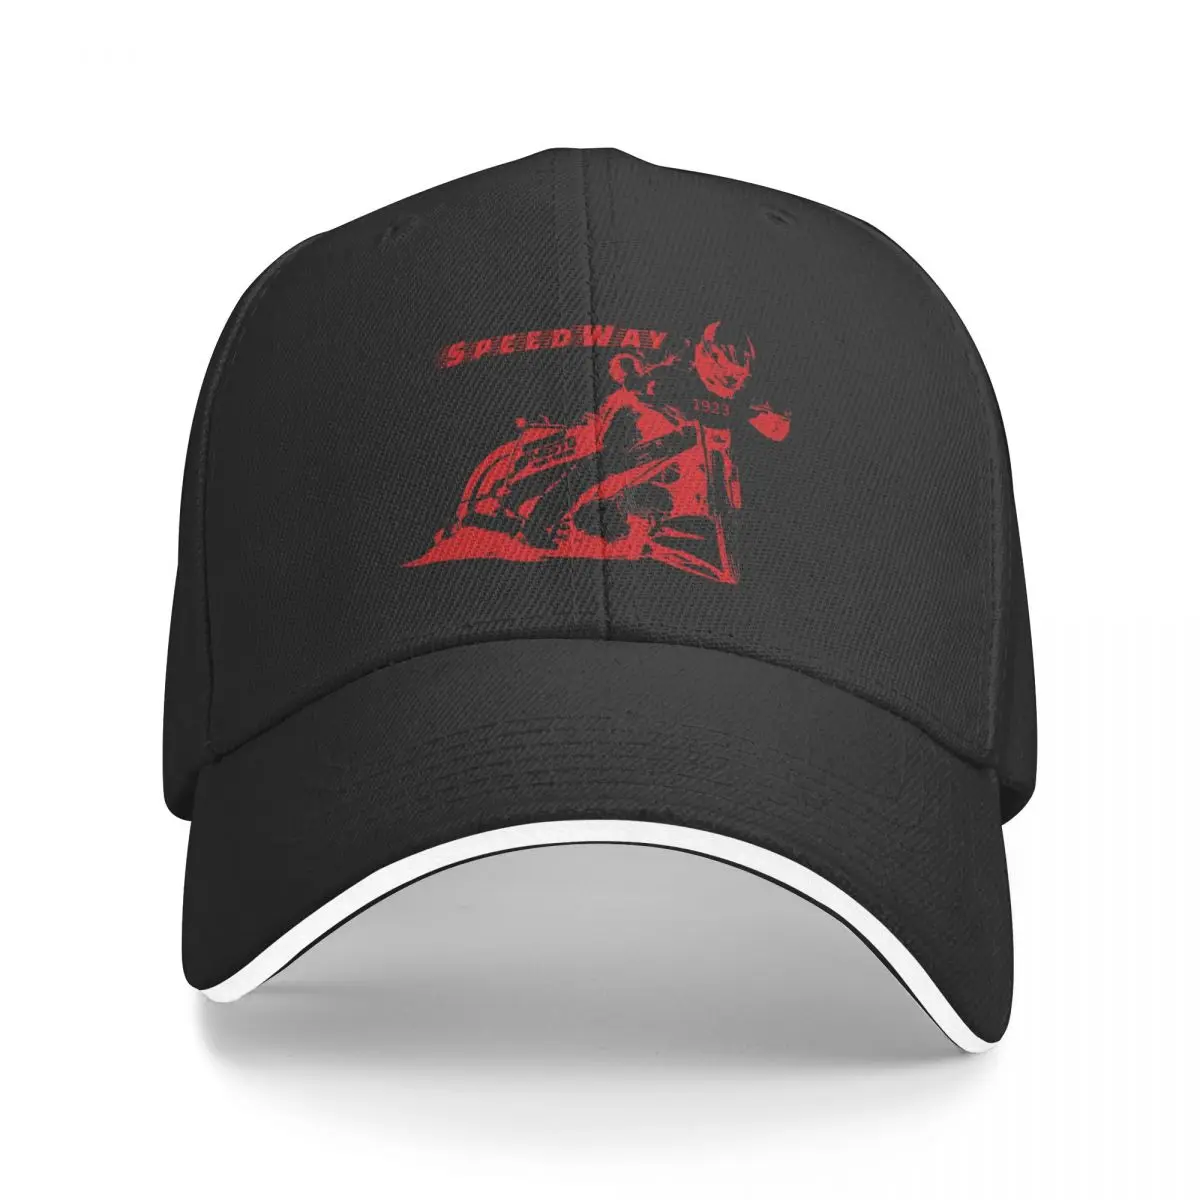 

New Speedway 4 Baseball Cap Streetwear Gentleman Hat Wild Ball Hat New Hat Woman Cap Men's